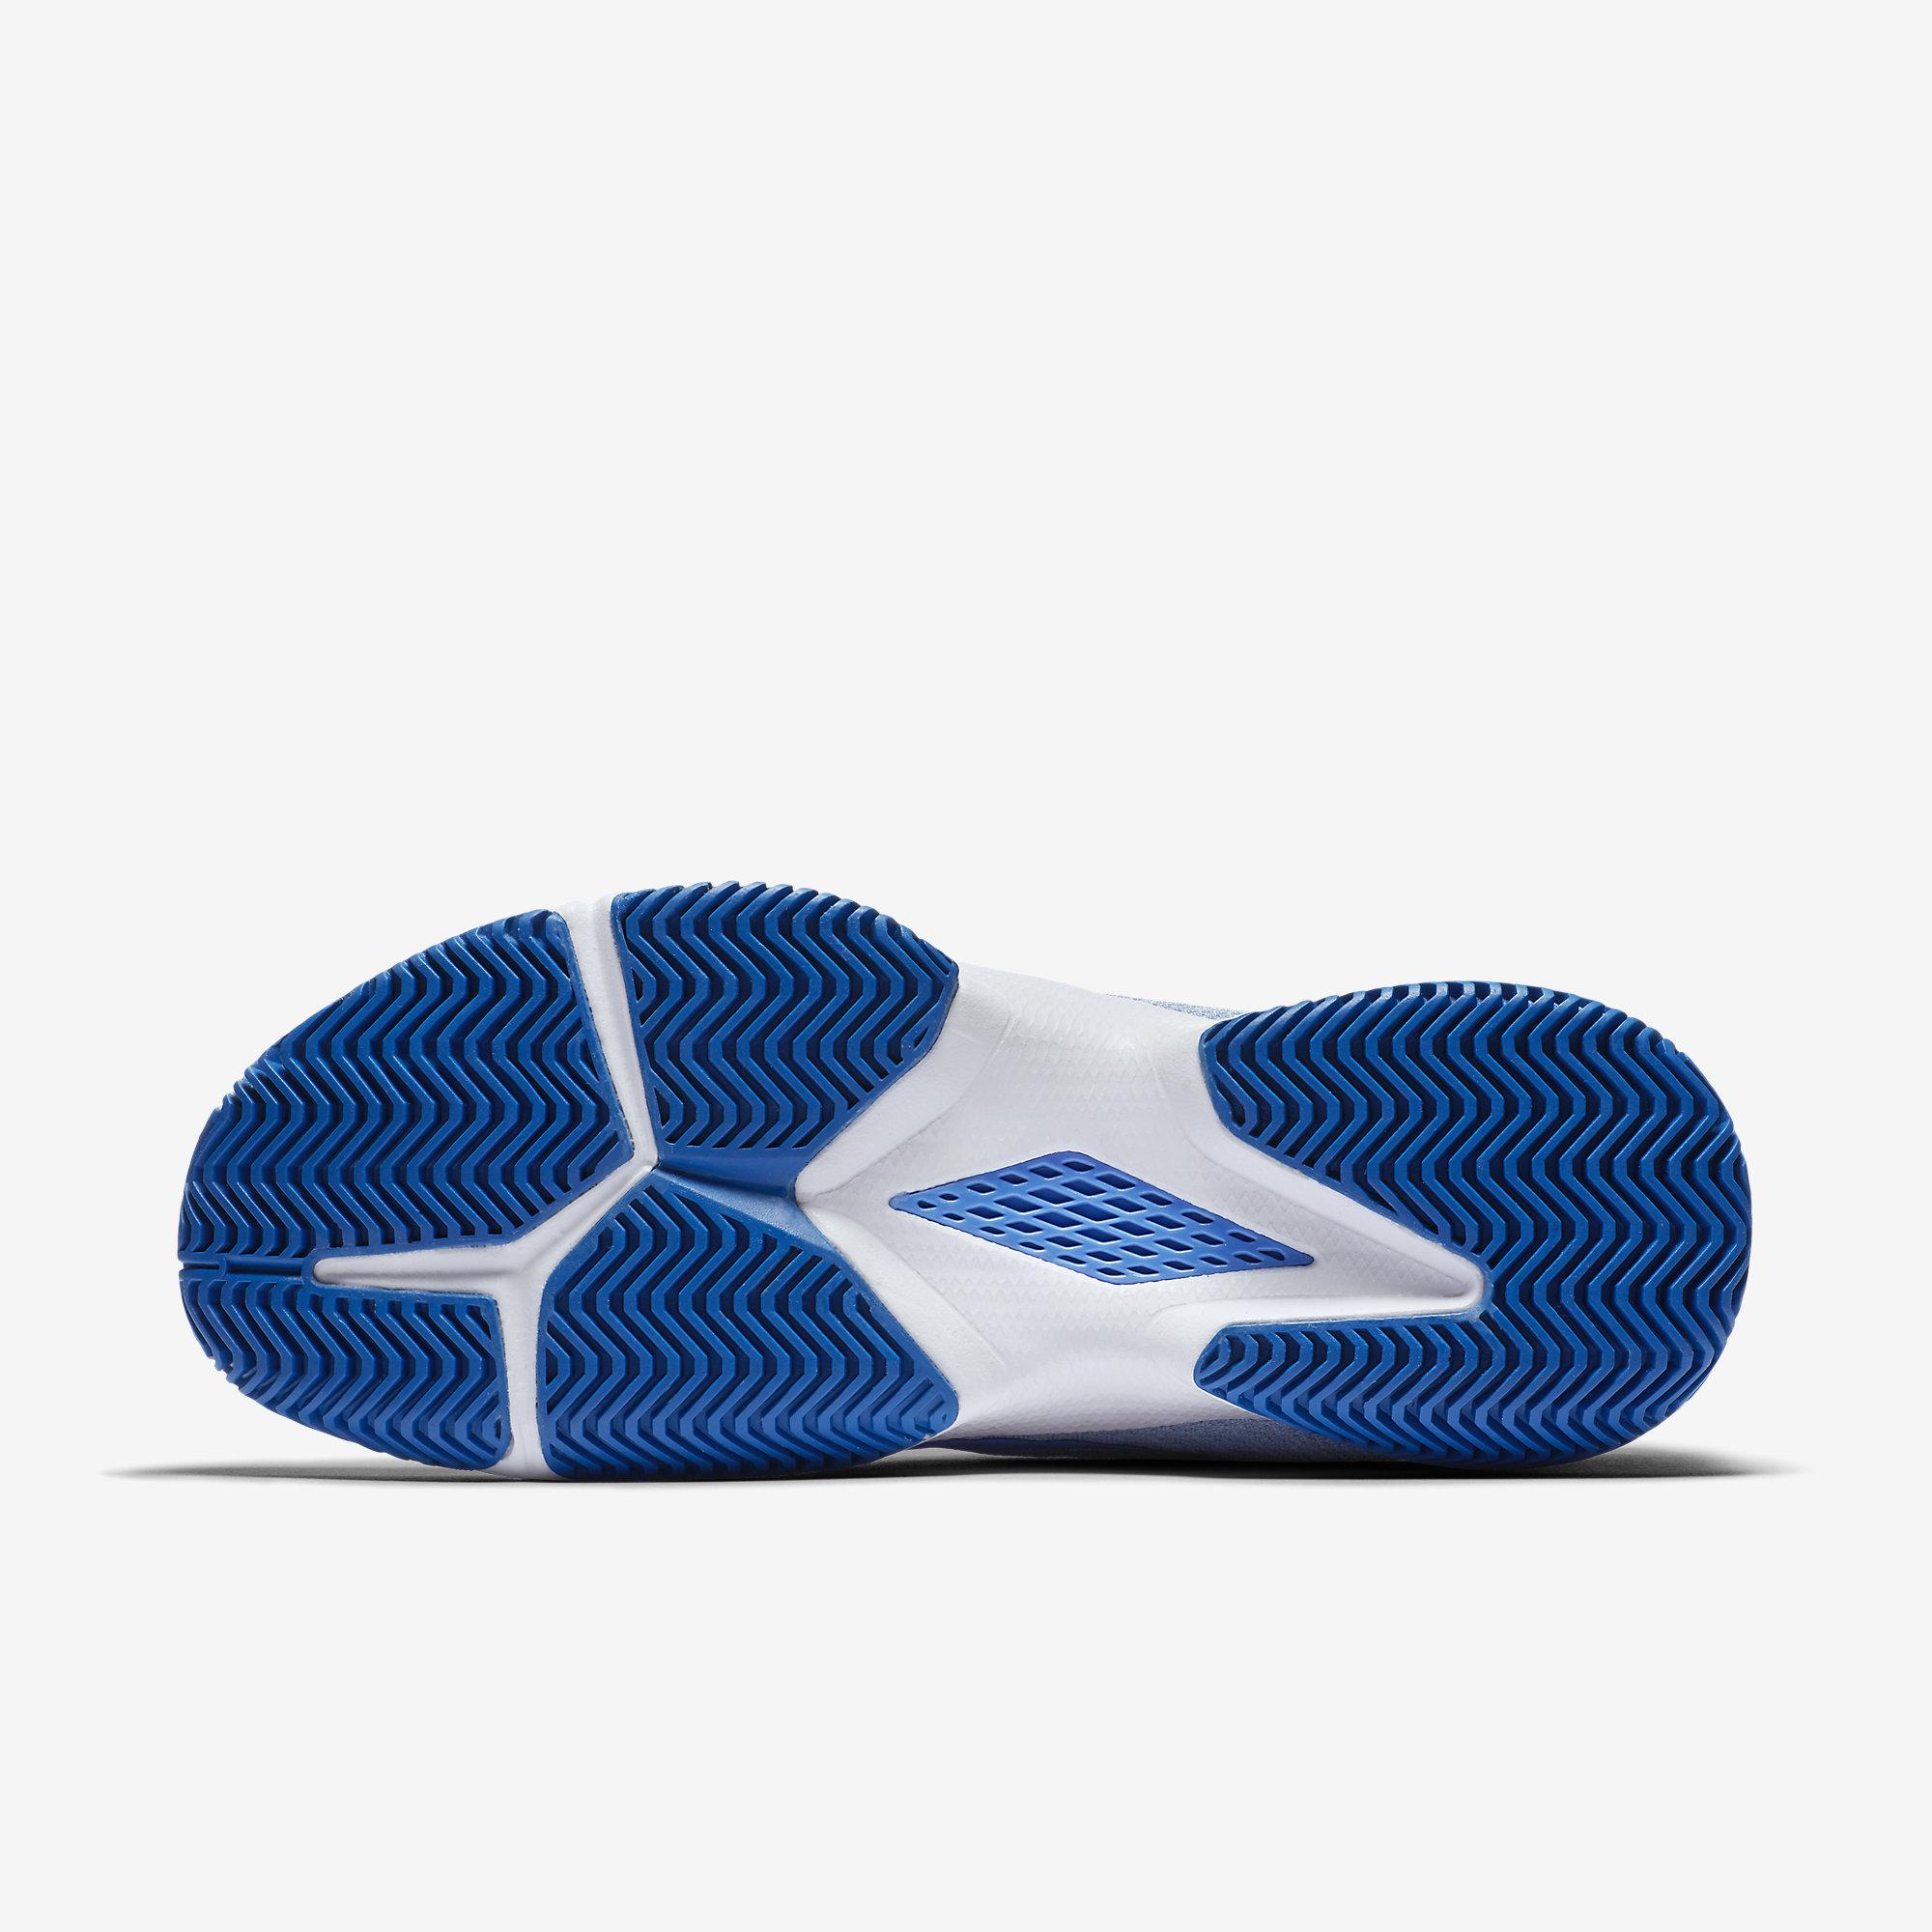 Nike Womens Air Zoom Ultra Tennis Shoes - Royal Tint/Military Blue ...